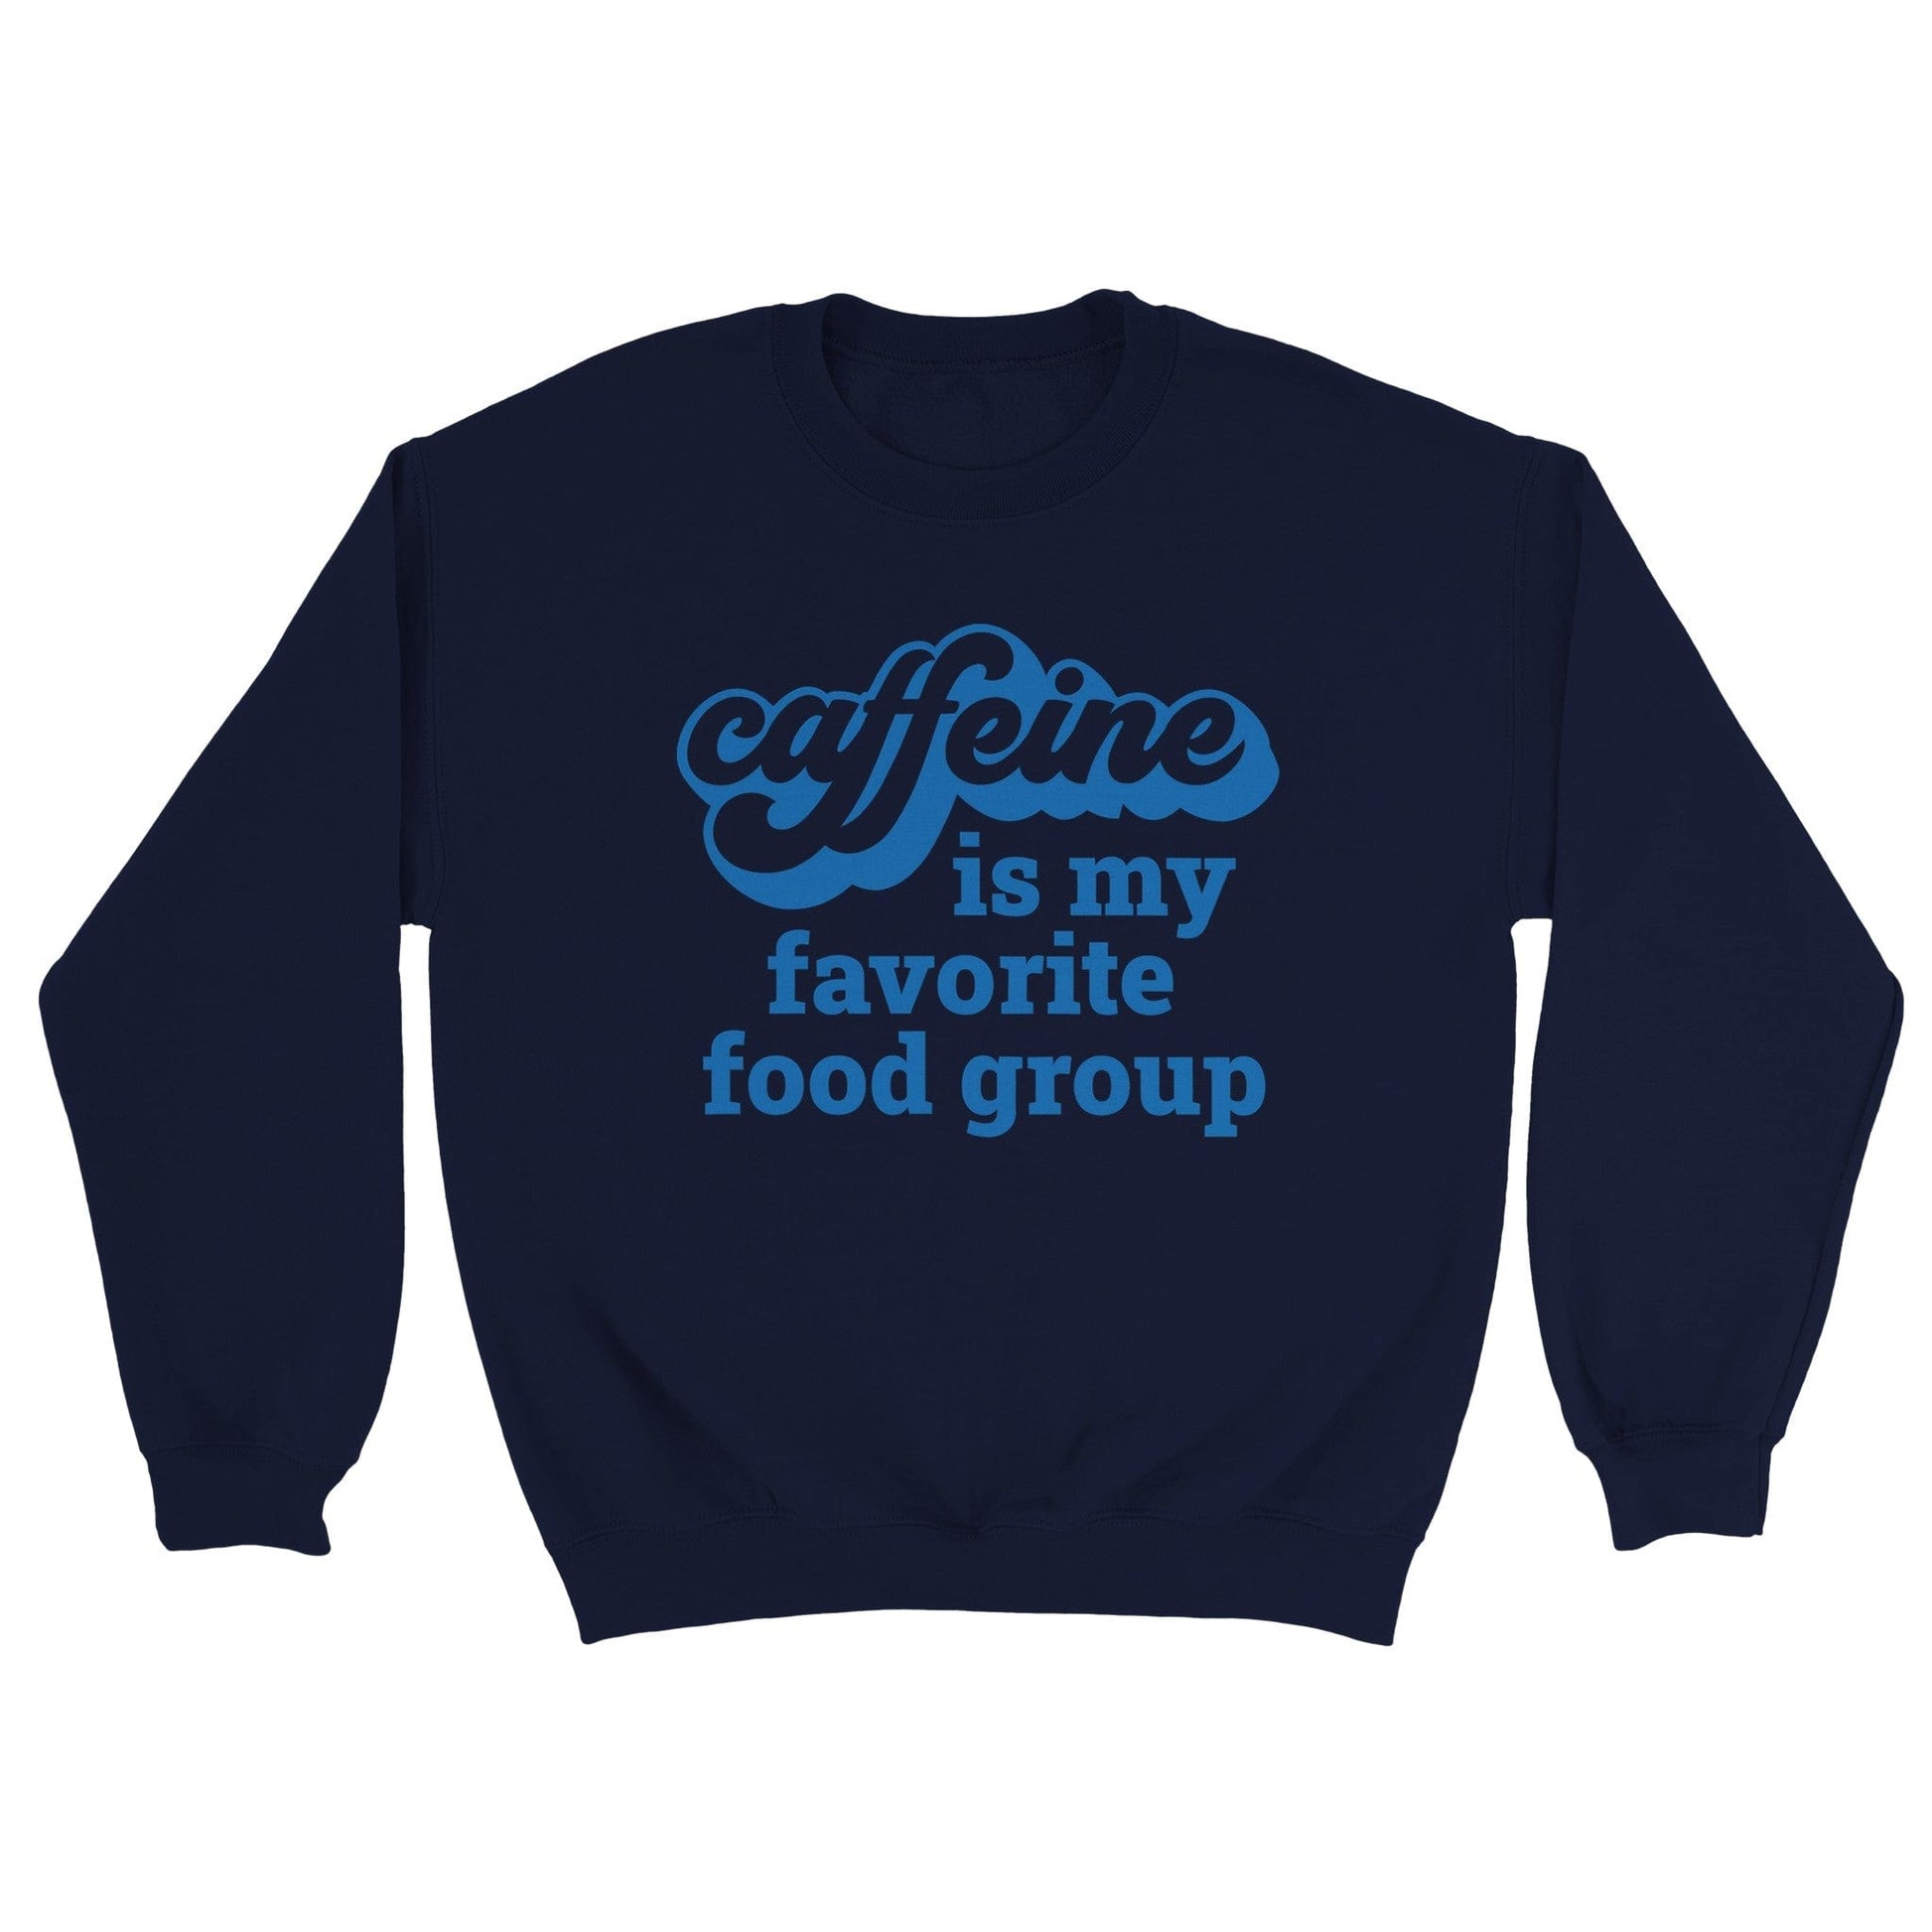 Good Bean Gifts "Caffeine is my favorite food group" Unisex Crewneck Sweatshirt S / Navy